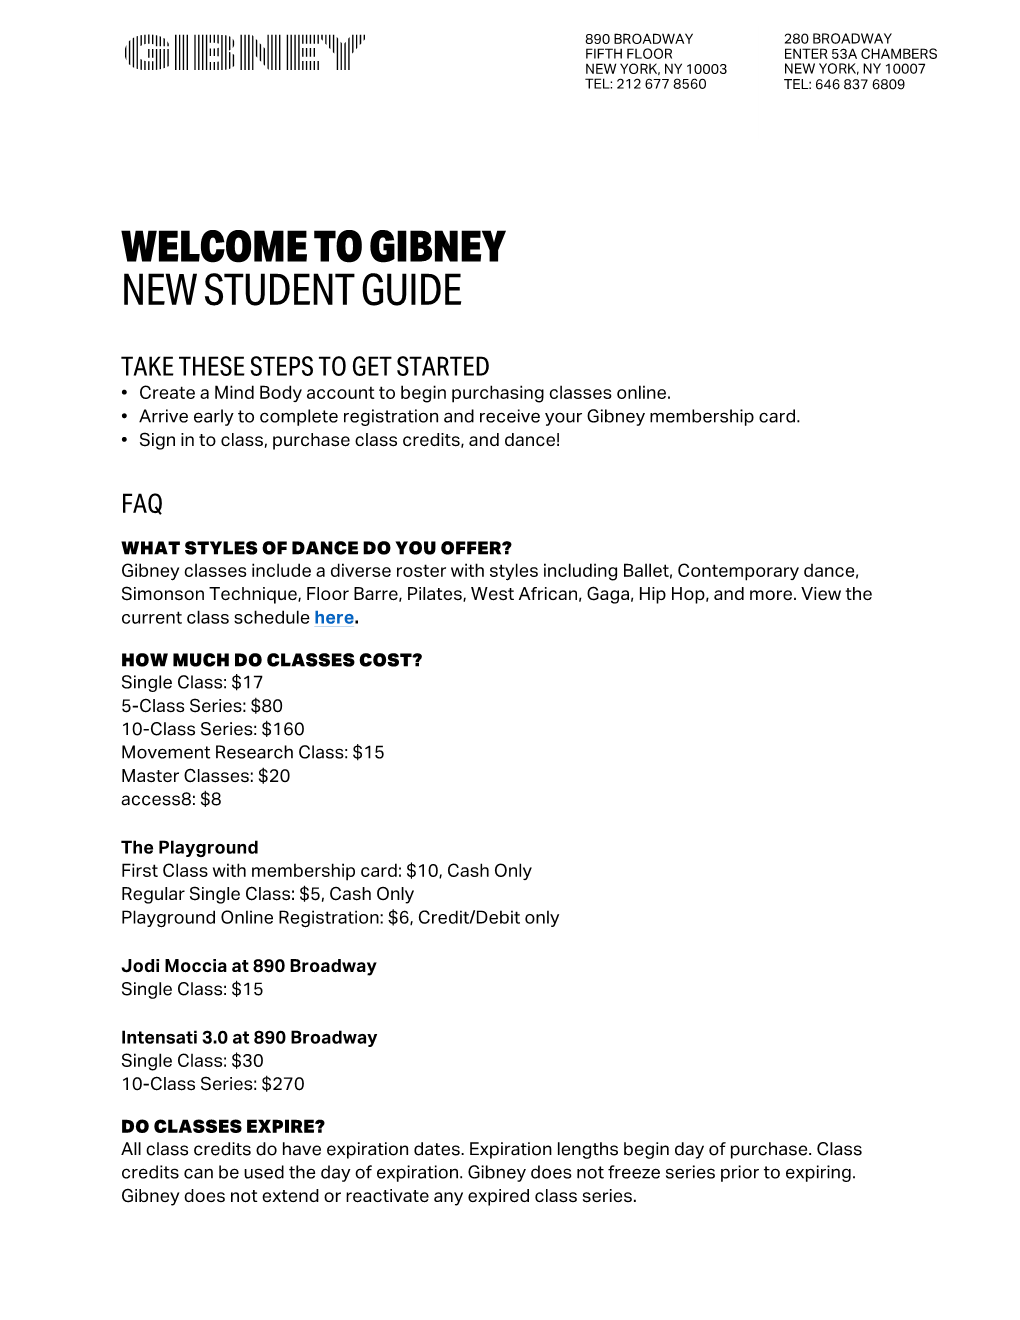 Gibney New Student Guide